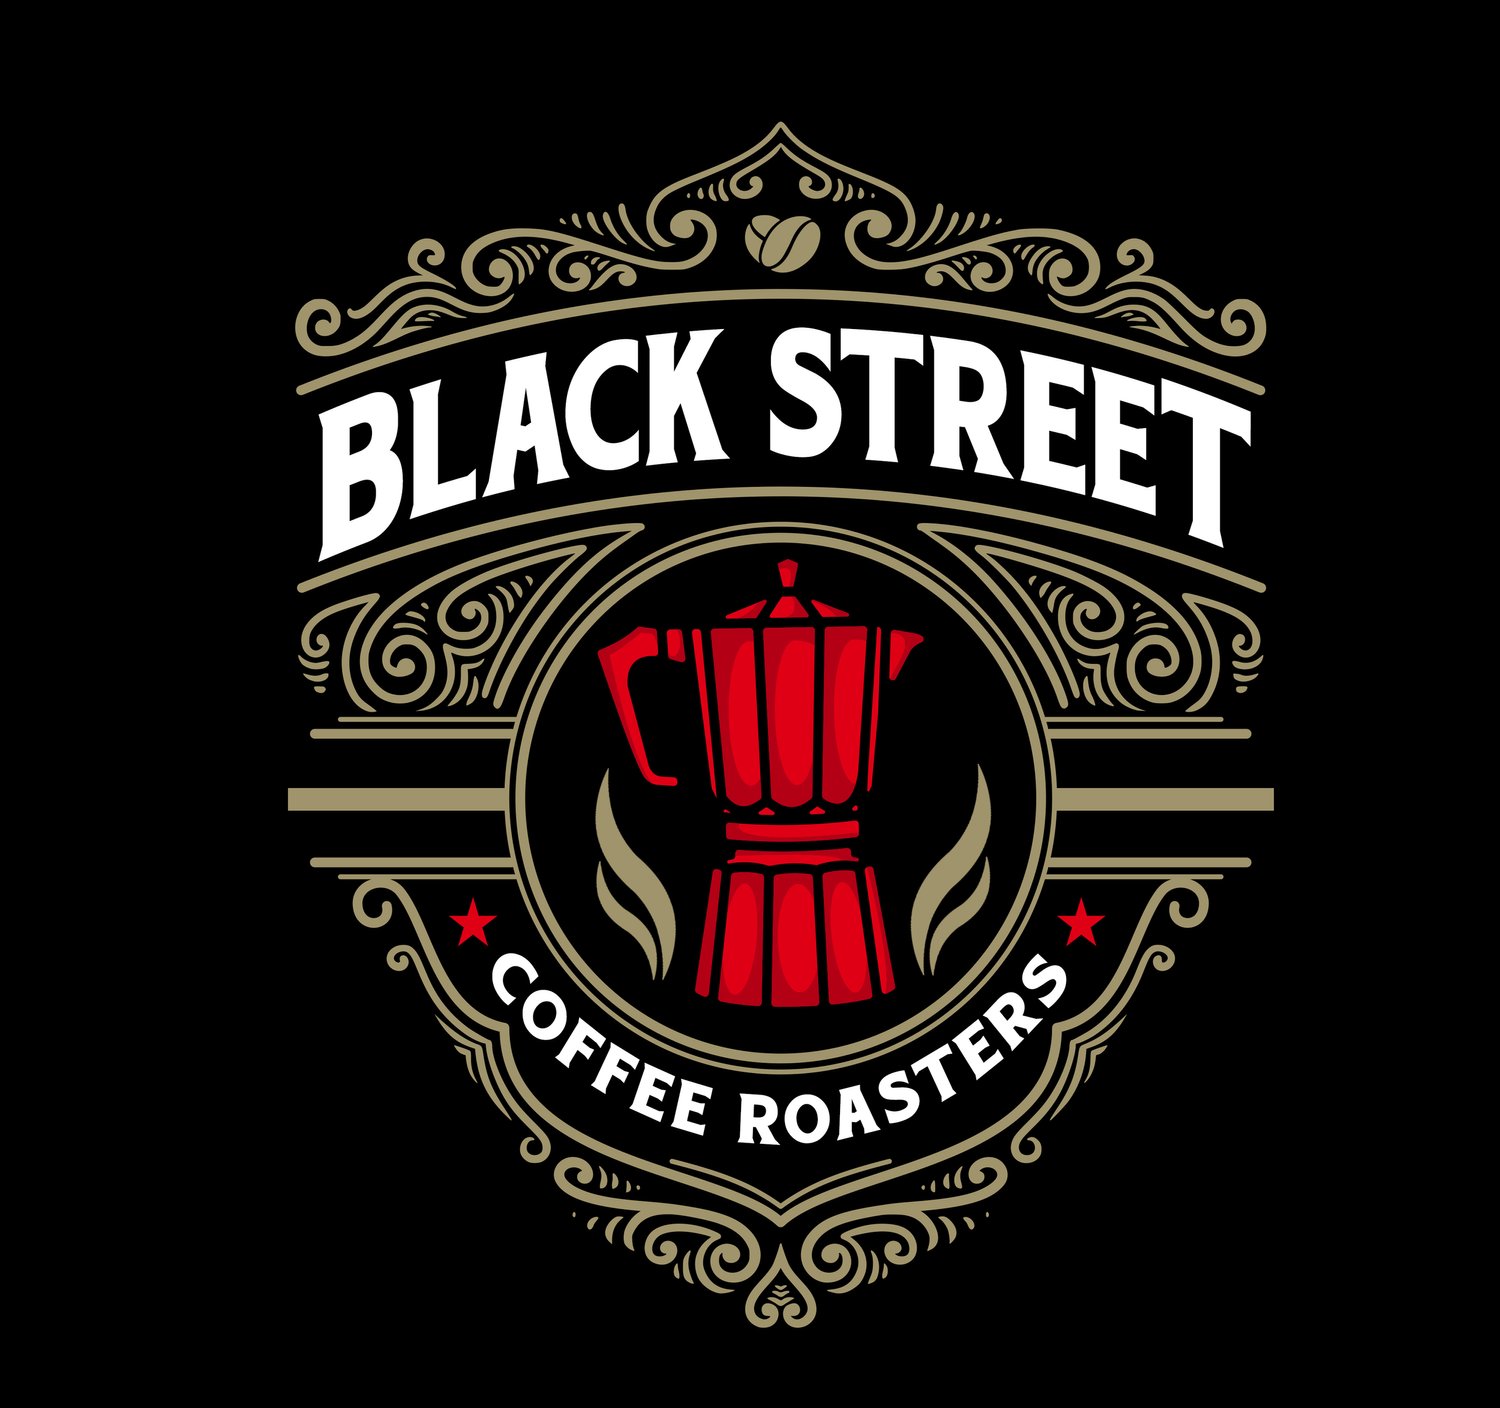 BLACK STREET COFFEE ROASTERS